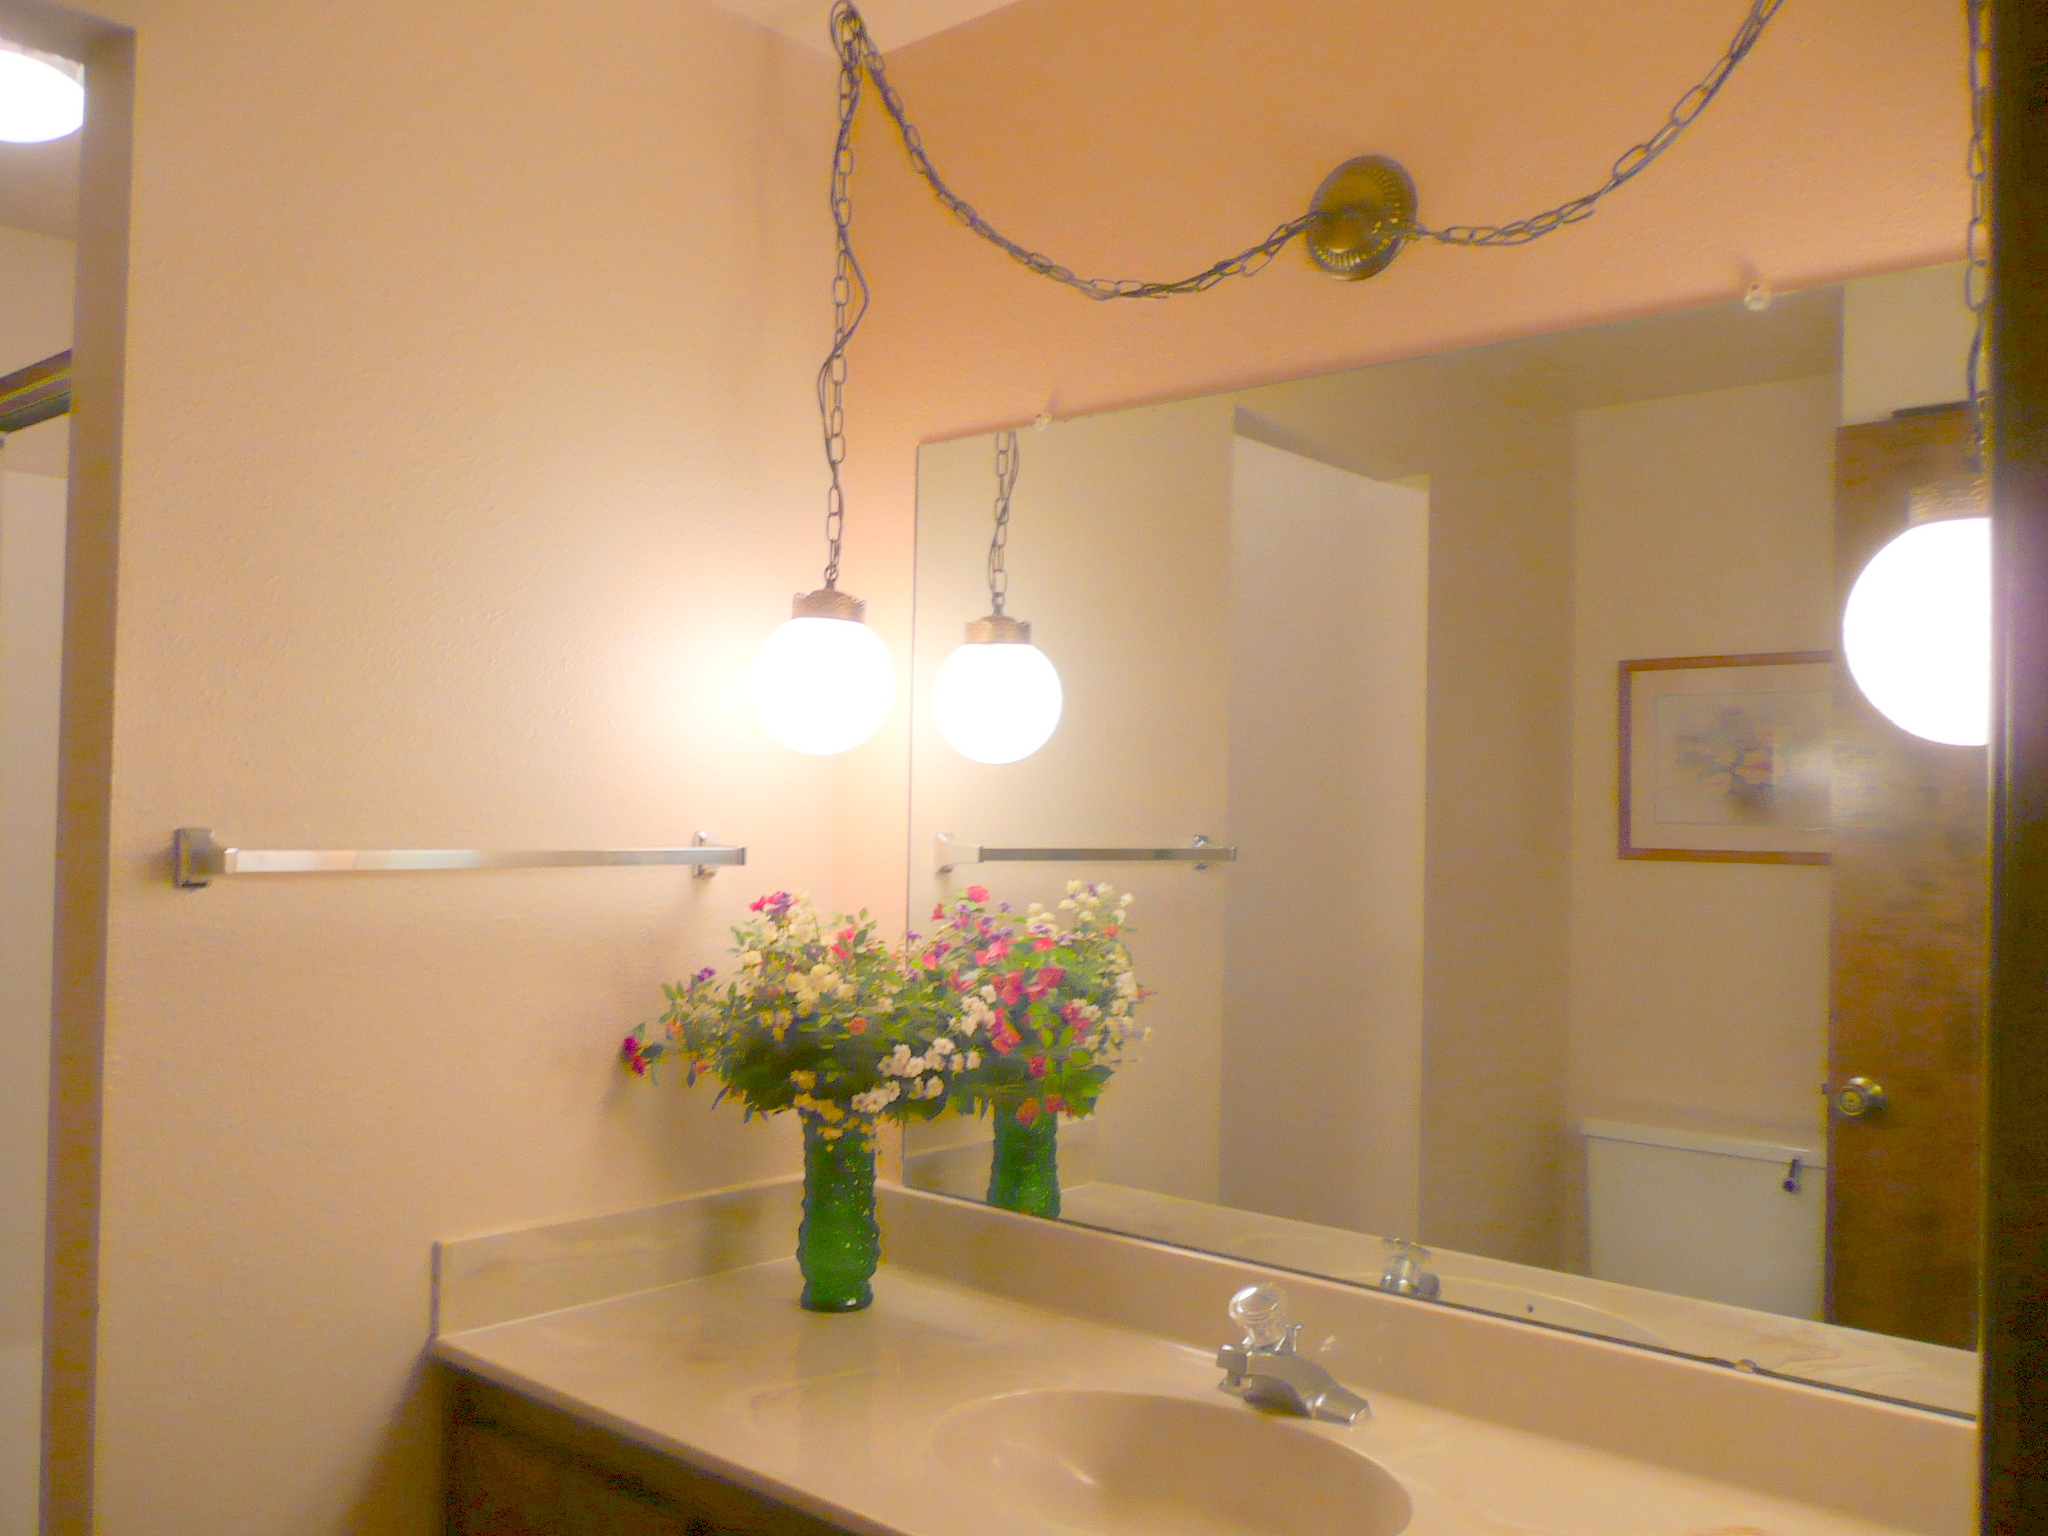 Updating Bathroom Vanity Lighting - Tips for Home Sellers - Home